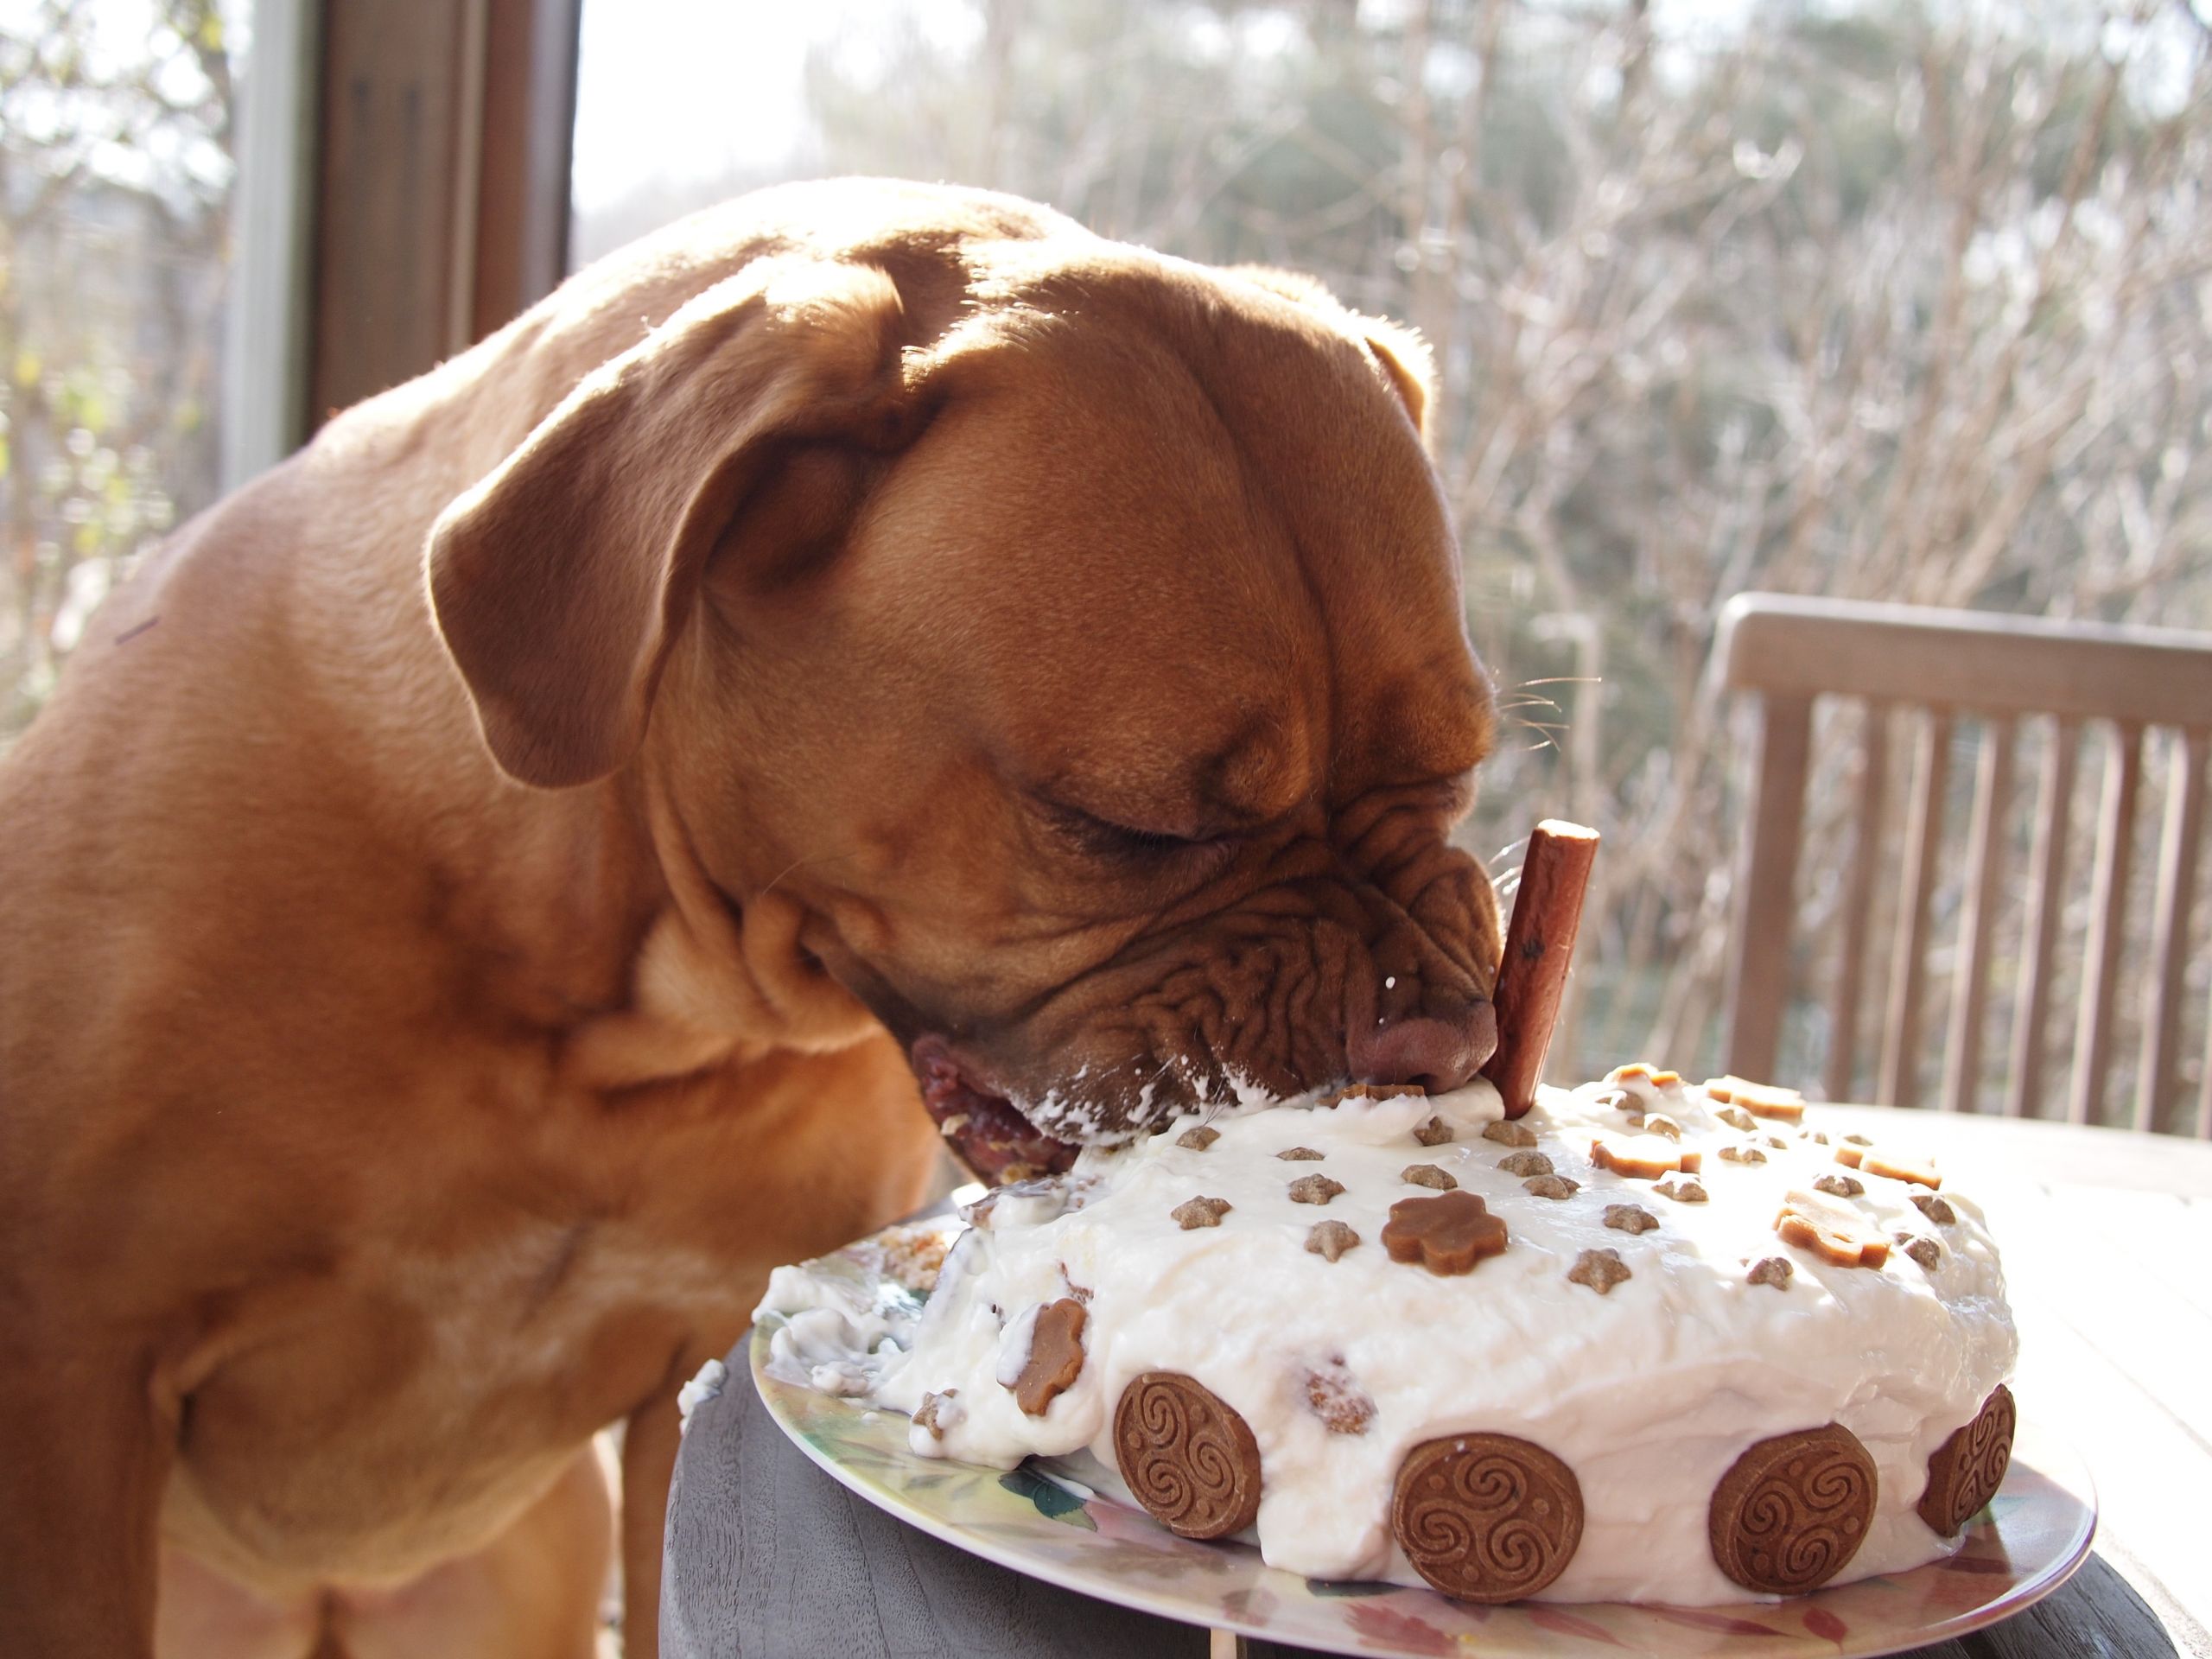 Doggie Birthday Cakes
 How to bake a healthy dog birthday cake